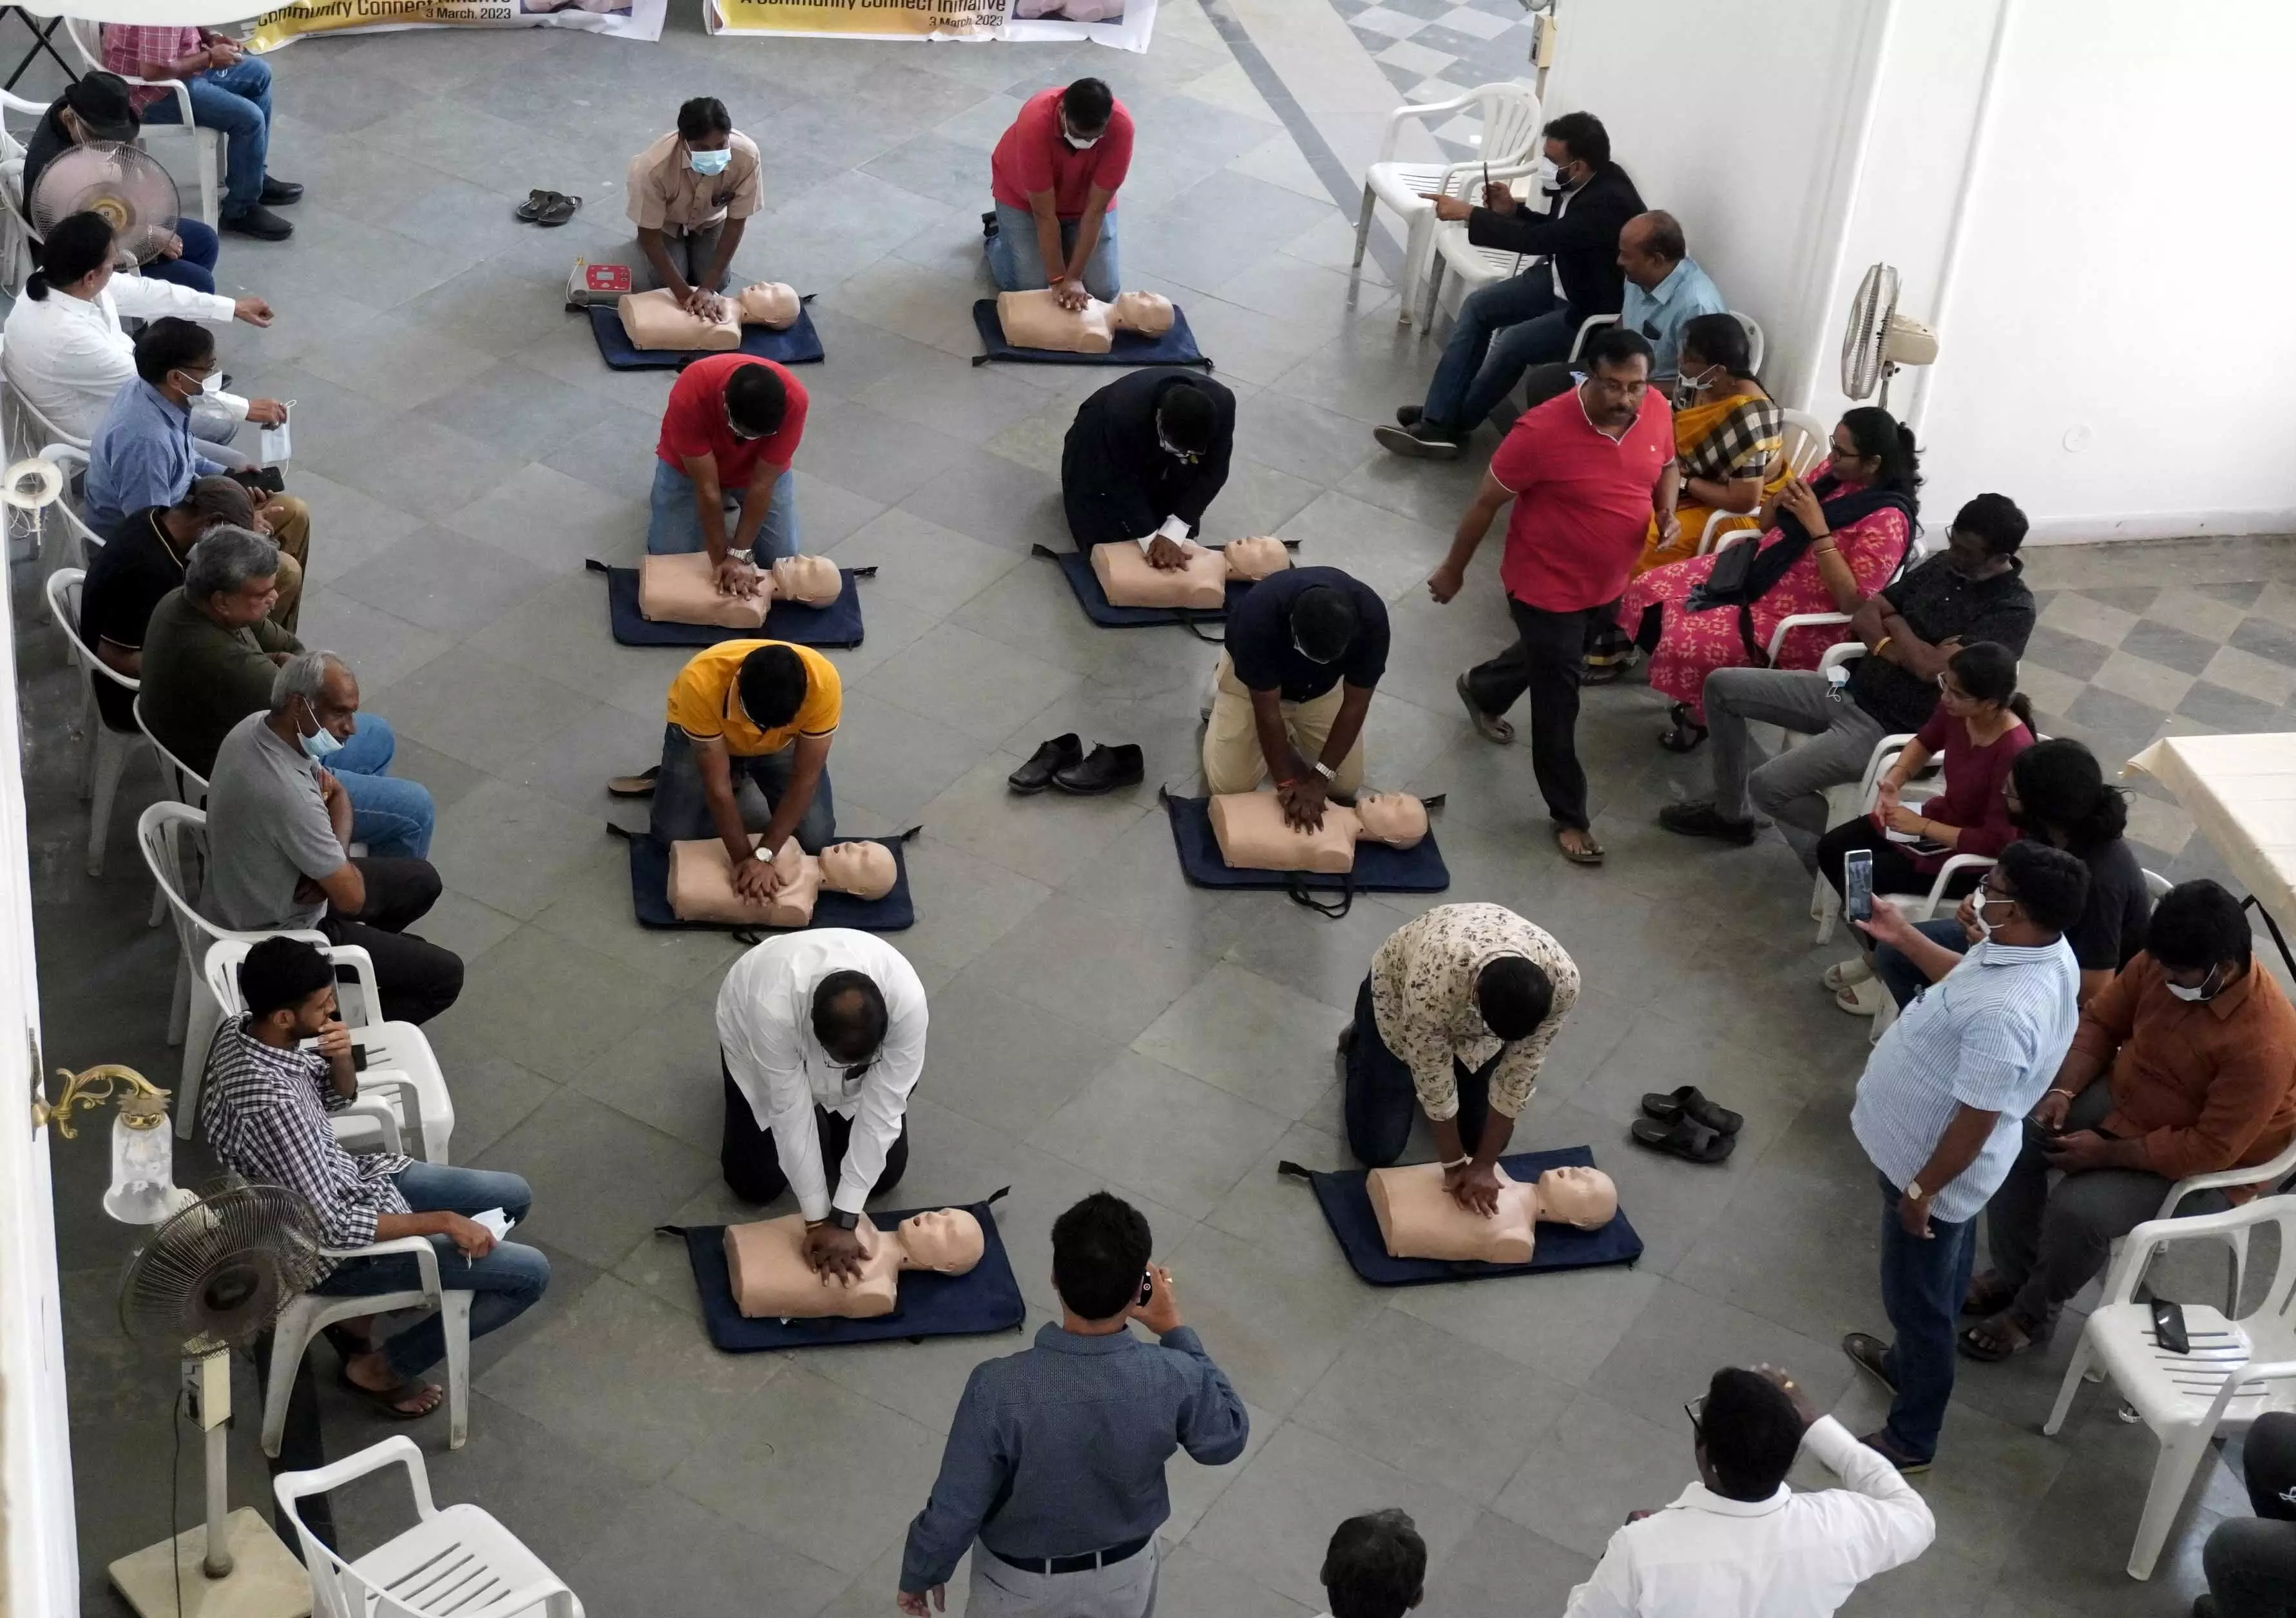 Freemasons Lodge Keys community outreach program CPR training held